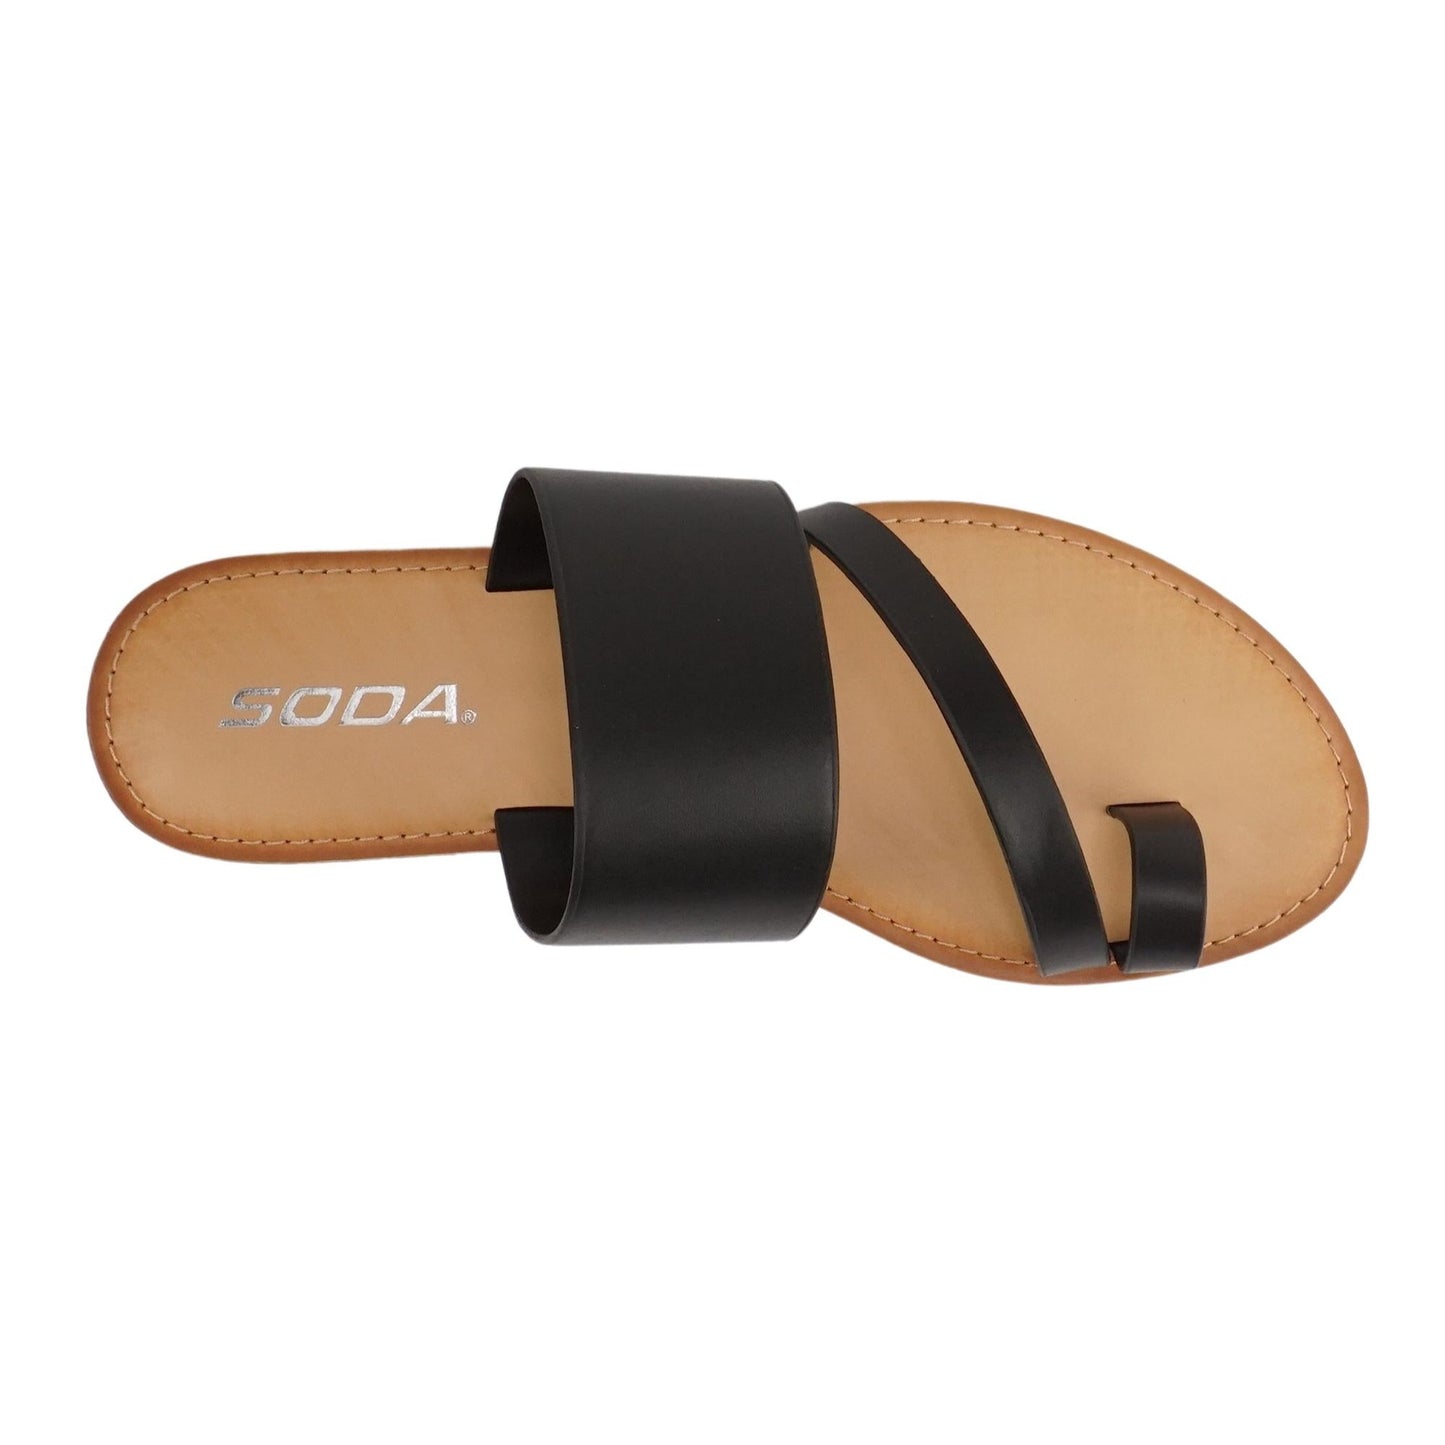 SODA Women's Black Strappy Flat Sandals - Size 7